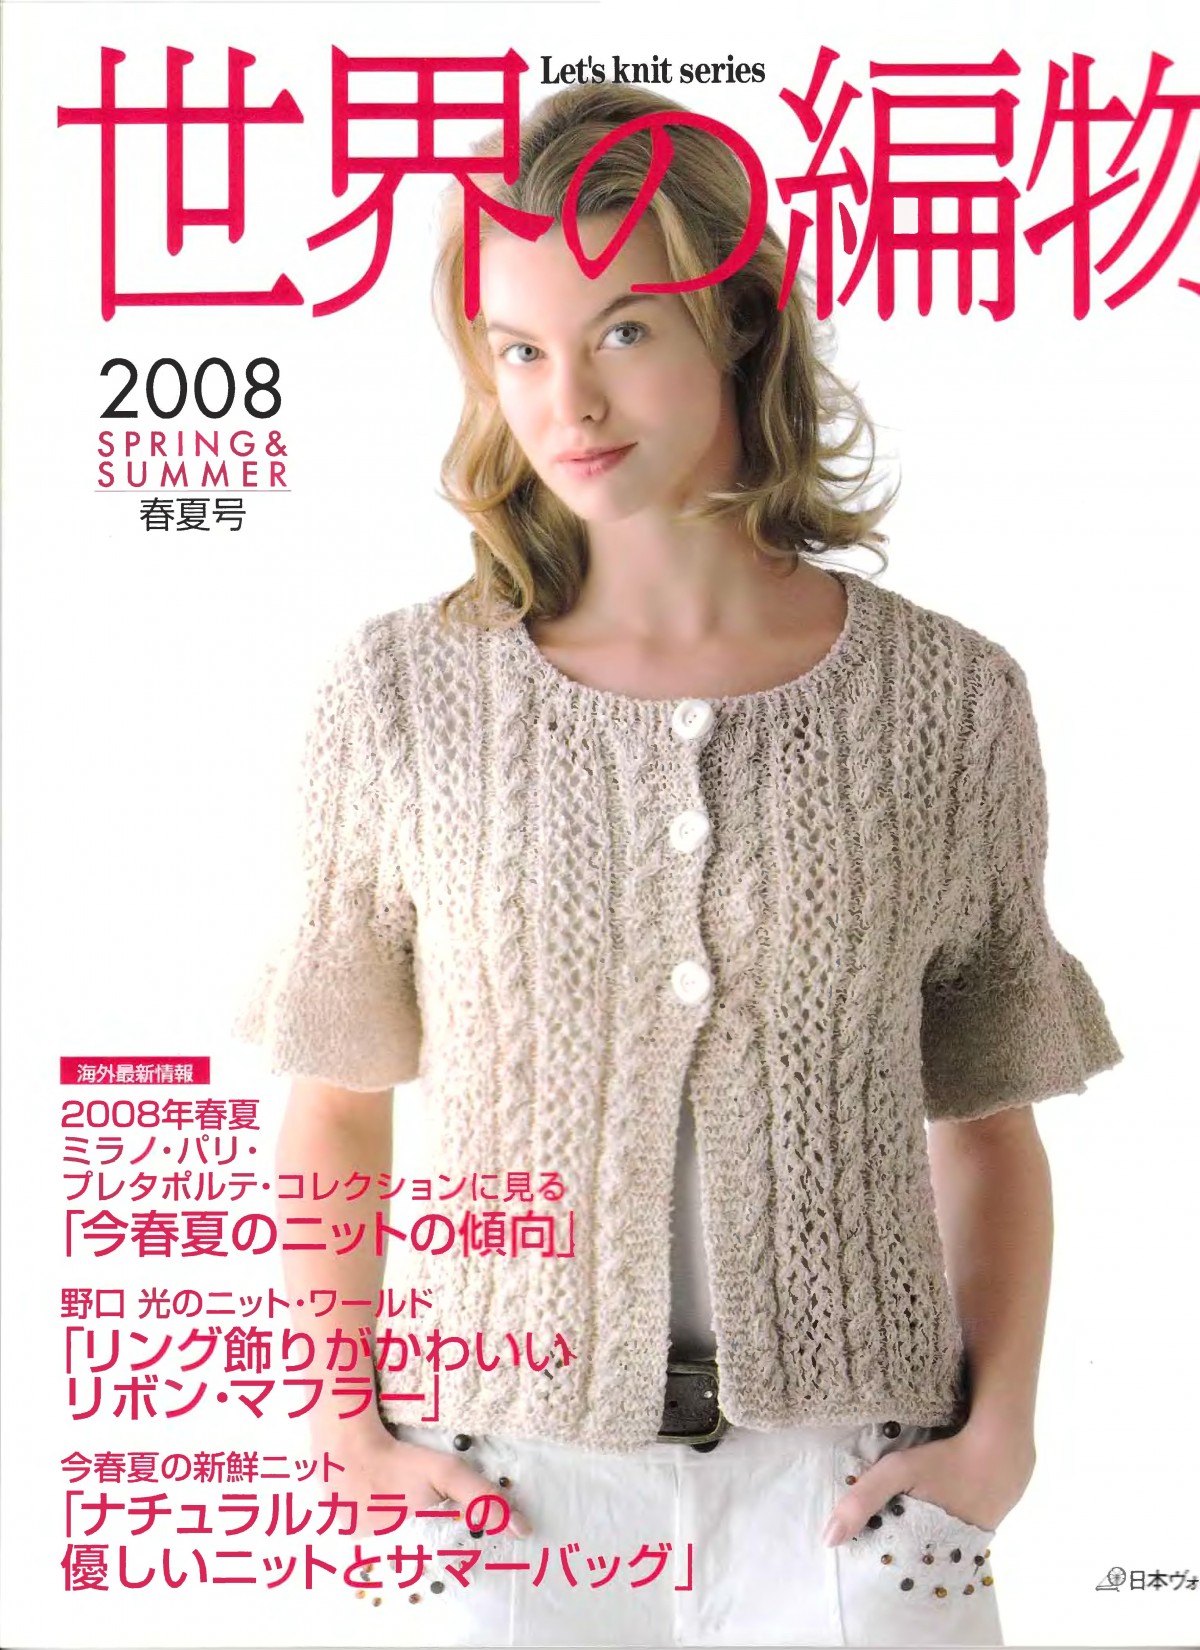 Lets-knit-series-NV4359-2008-Spring-Summer-sp-kr_1.jpg